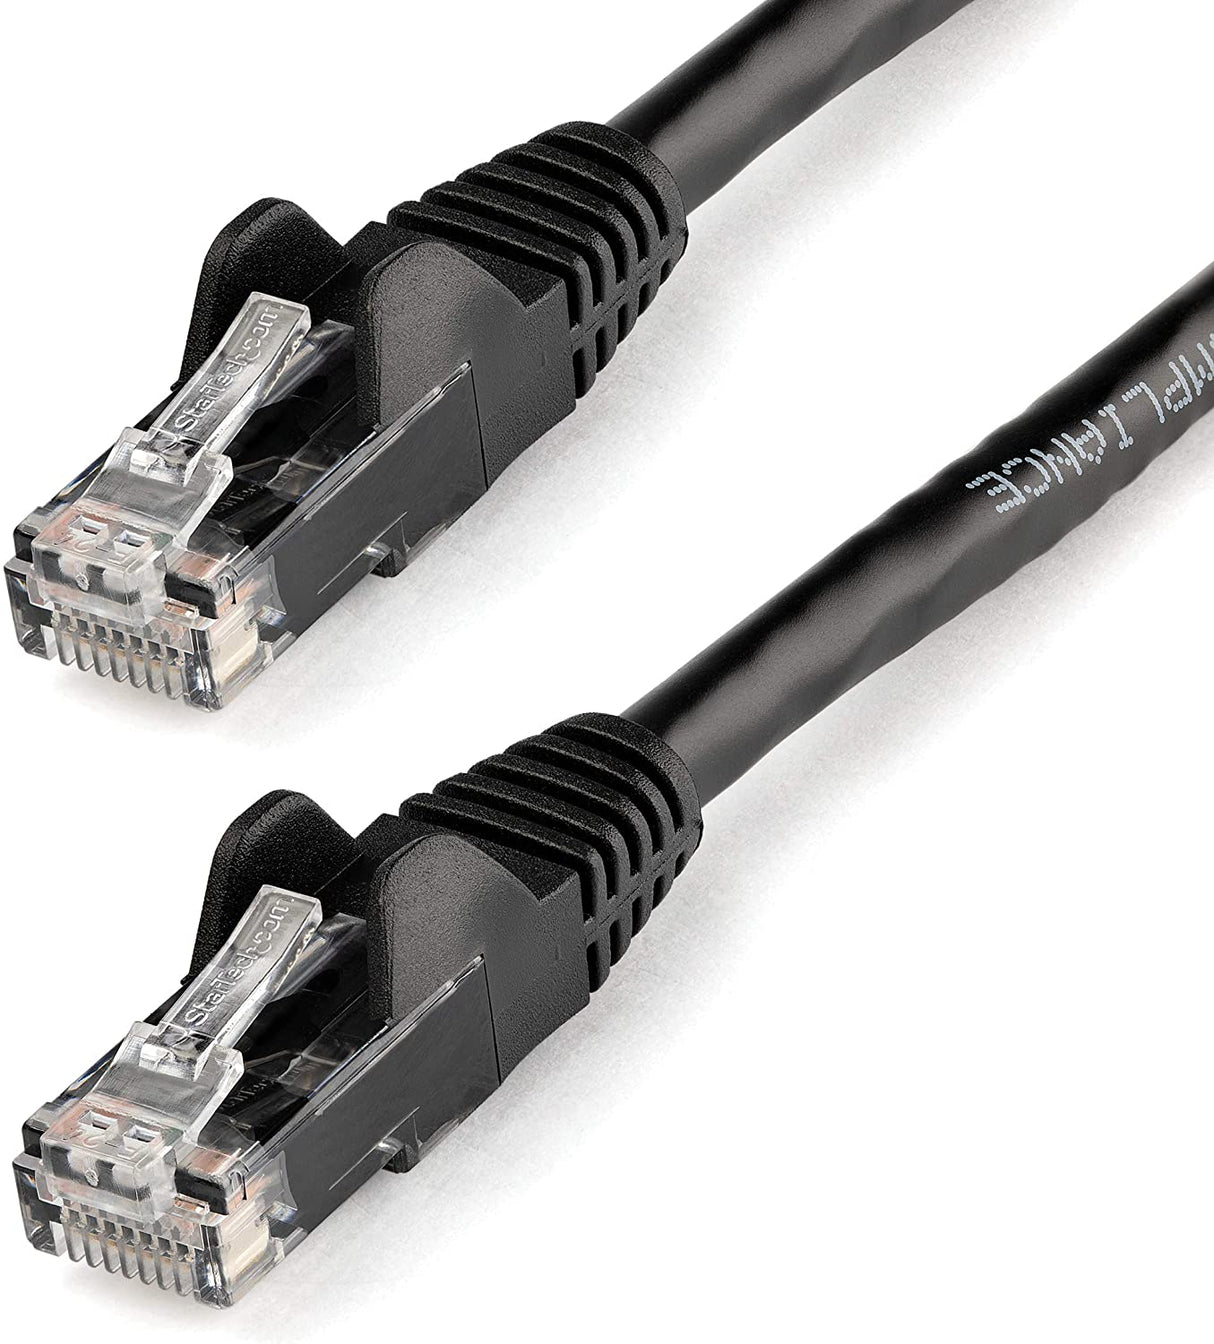 StarTech.com 15 ft. CAT6 Ethernet Cable - 10 Pack - ETL Verified - Black CAT6 Patch Cord - Snagless RJ45 Connectors - 24 AWG Copper Wire - UTP Ethernet Cable (N6PATCH15BK10PK) Black 15 ft / 4.5 m 10 Pack